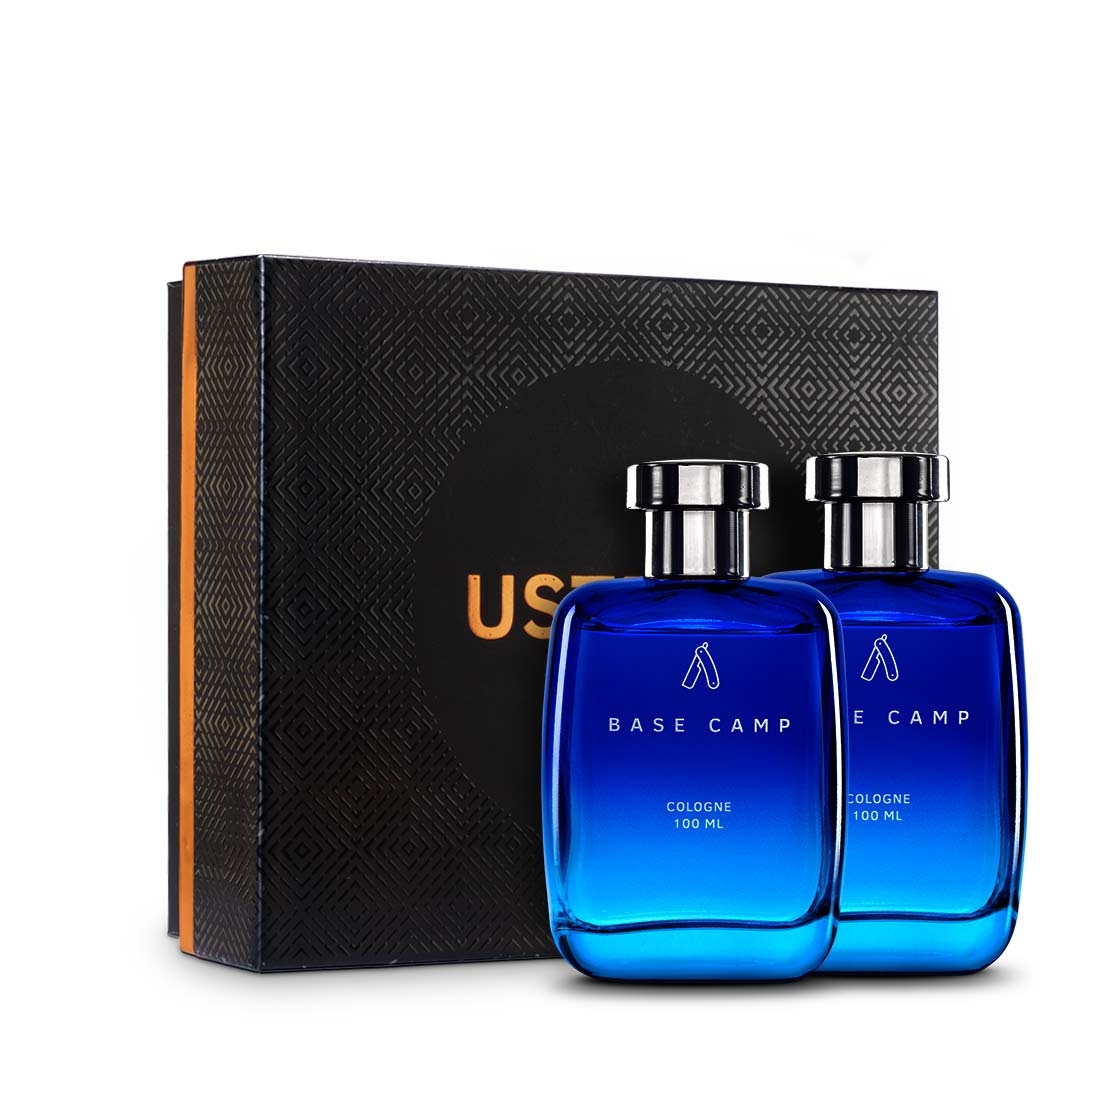 Ustraa | Fragrance Gift Box - Base Camp Cologne 100ml - Set of 2